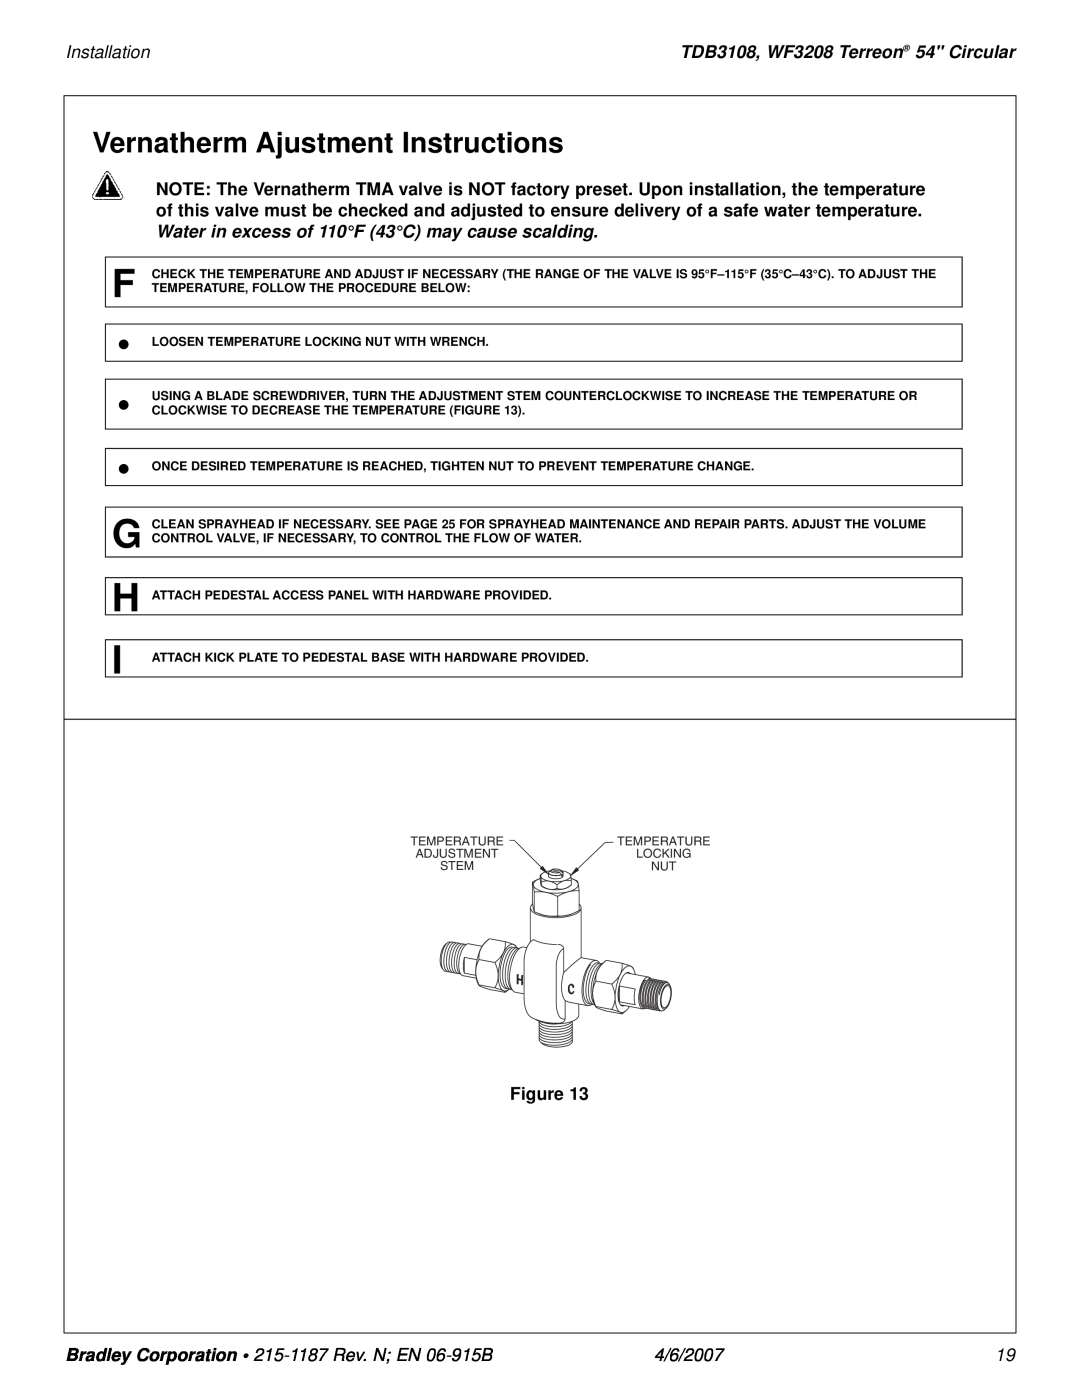 Bradley Smoker Vernatherm Ajustment Instructions, Installation, TDB3108, WF3208 Terreon 54 Circular, 4/6/2007 